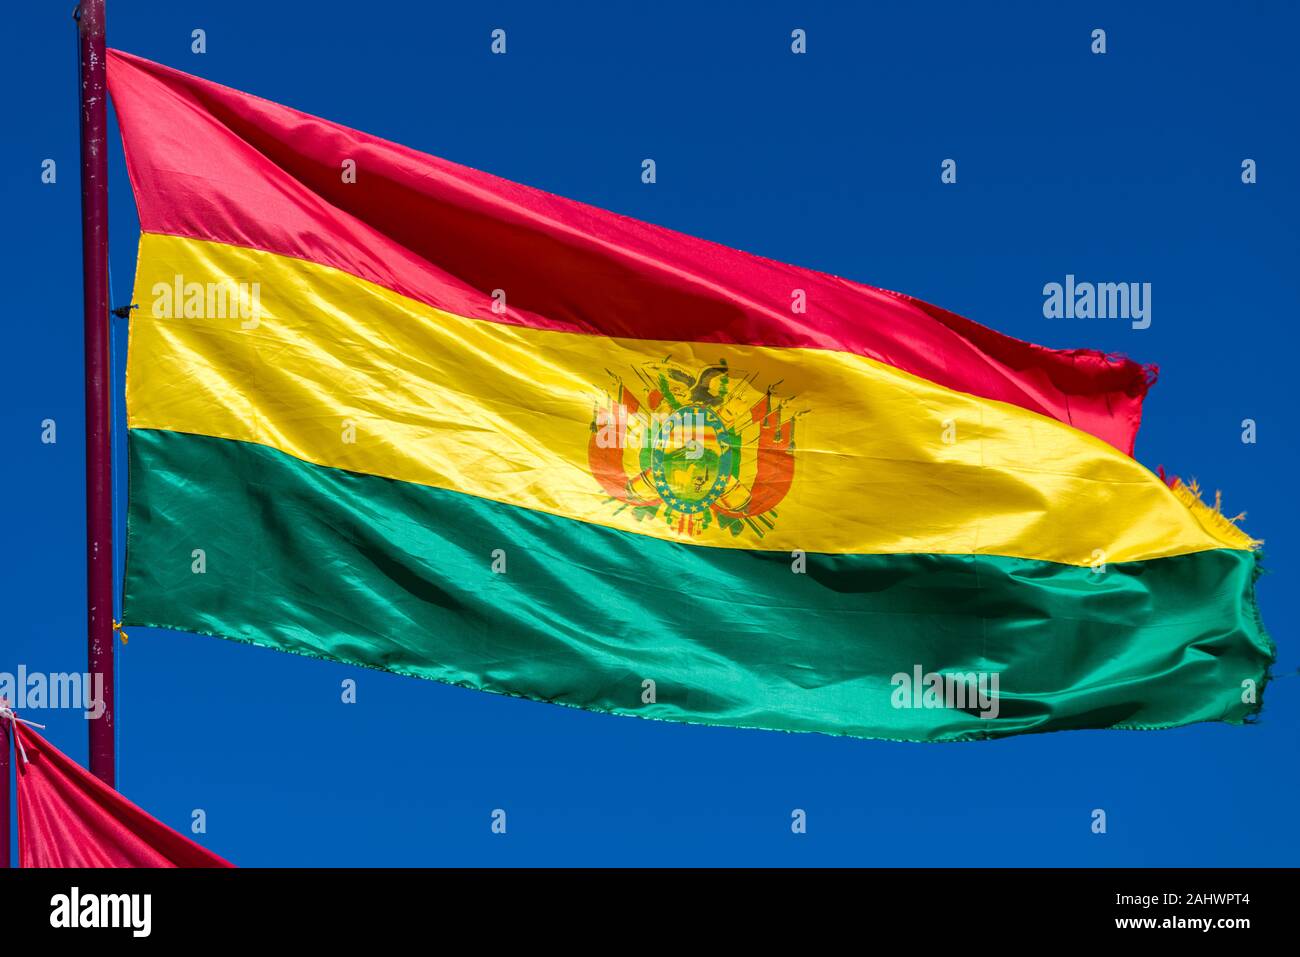 Bolivianischen Flagge bei Mirador Vulkan Ollagüe oder View Point Vulkan Ollagüe, Avaroa, Anden, Bolivien, Latein Amreica Stockfoto